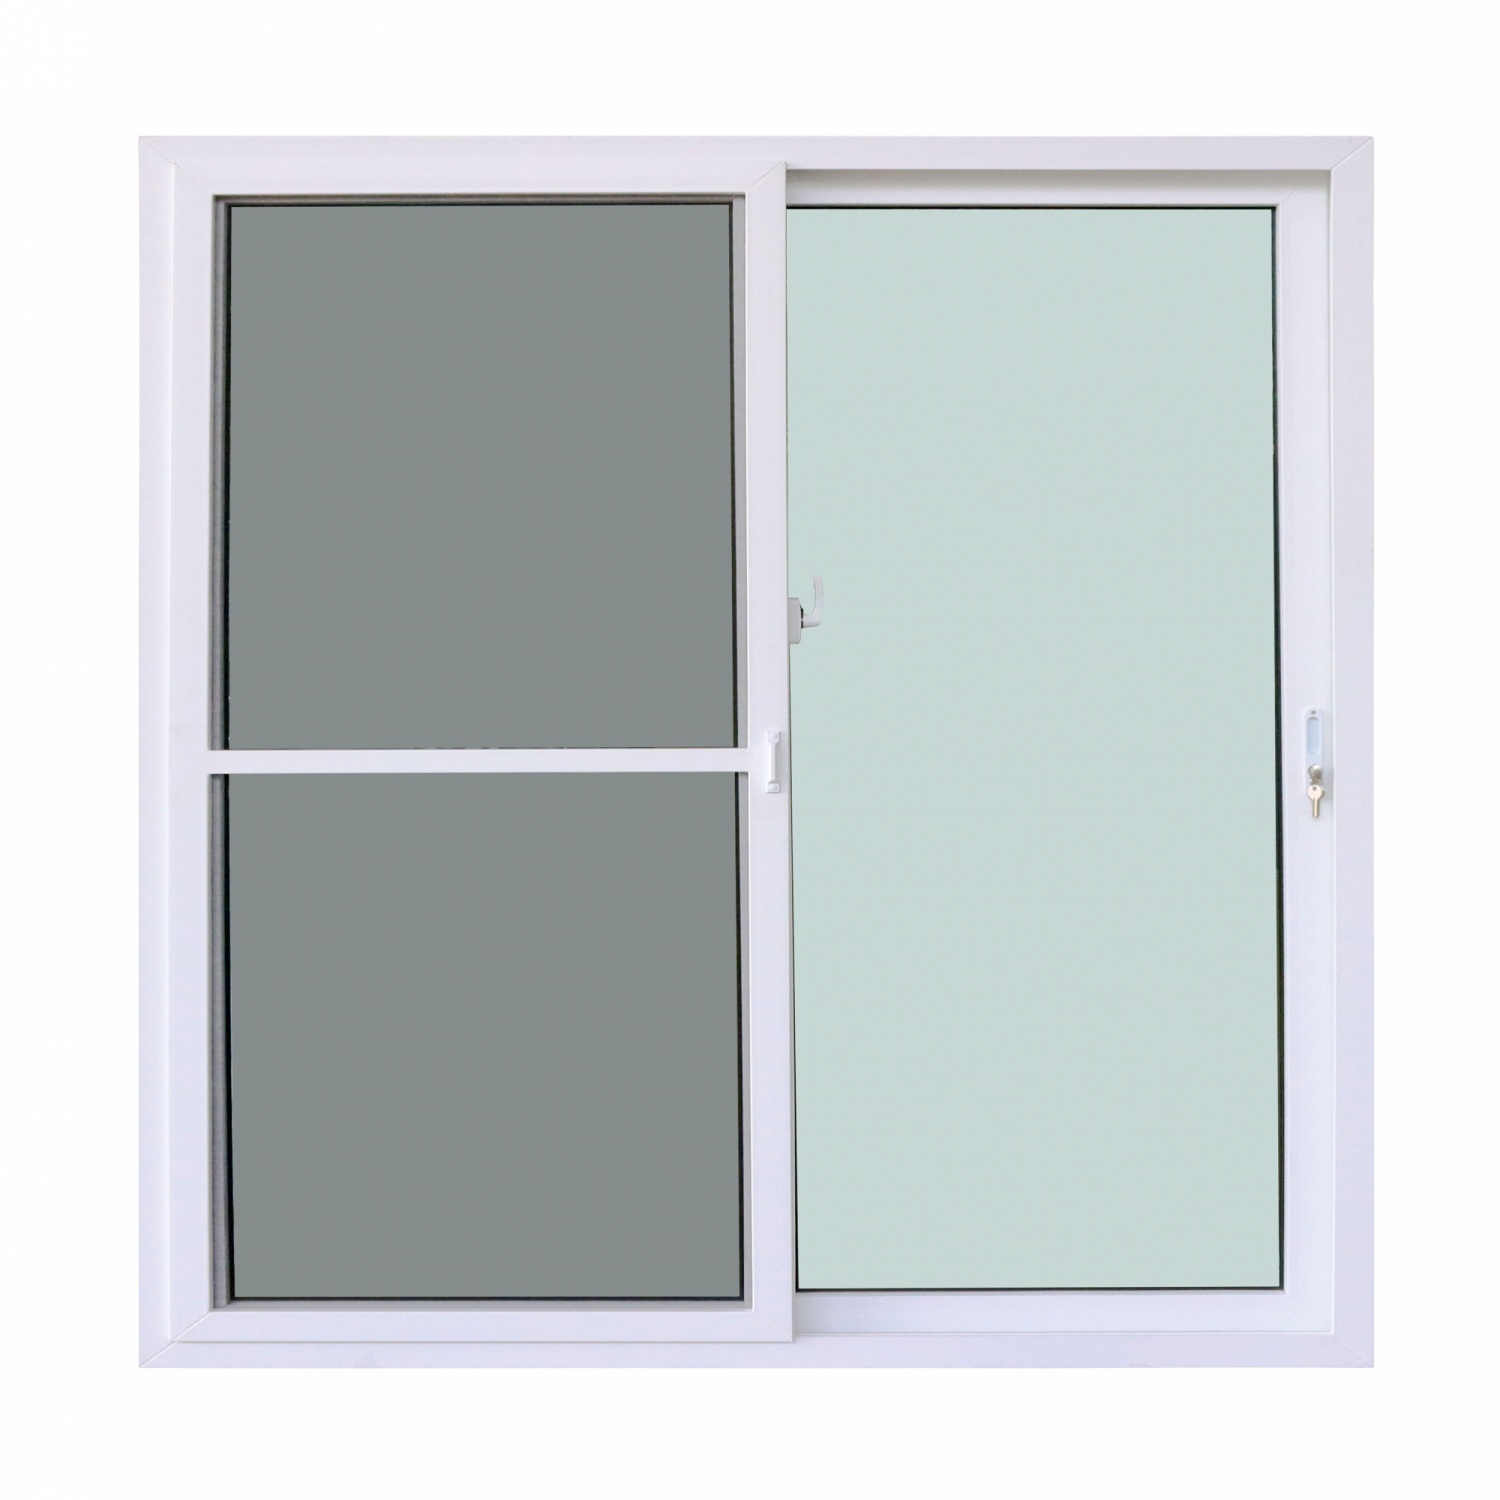 WINDOW ASIA (10MAX) UPVC ประตูบานเลื่อน SS 200X205 ซม. สีขาว พร้อมมุ้ง 